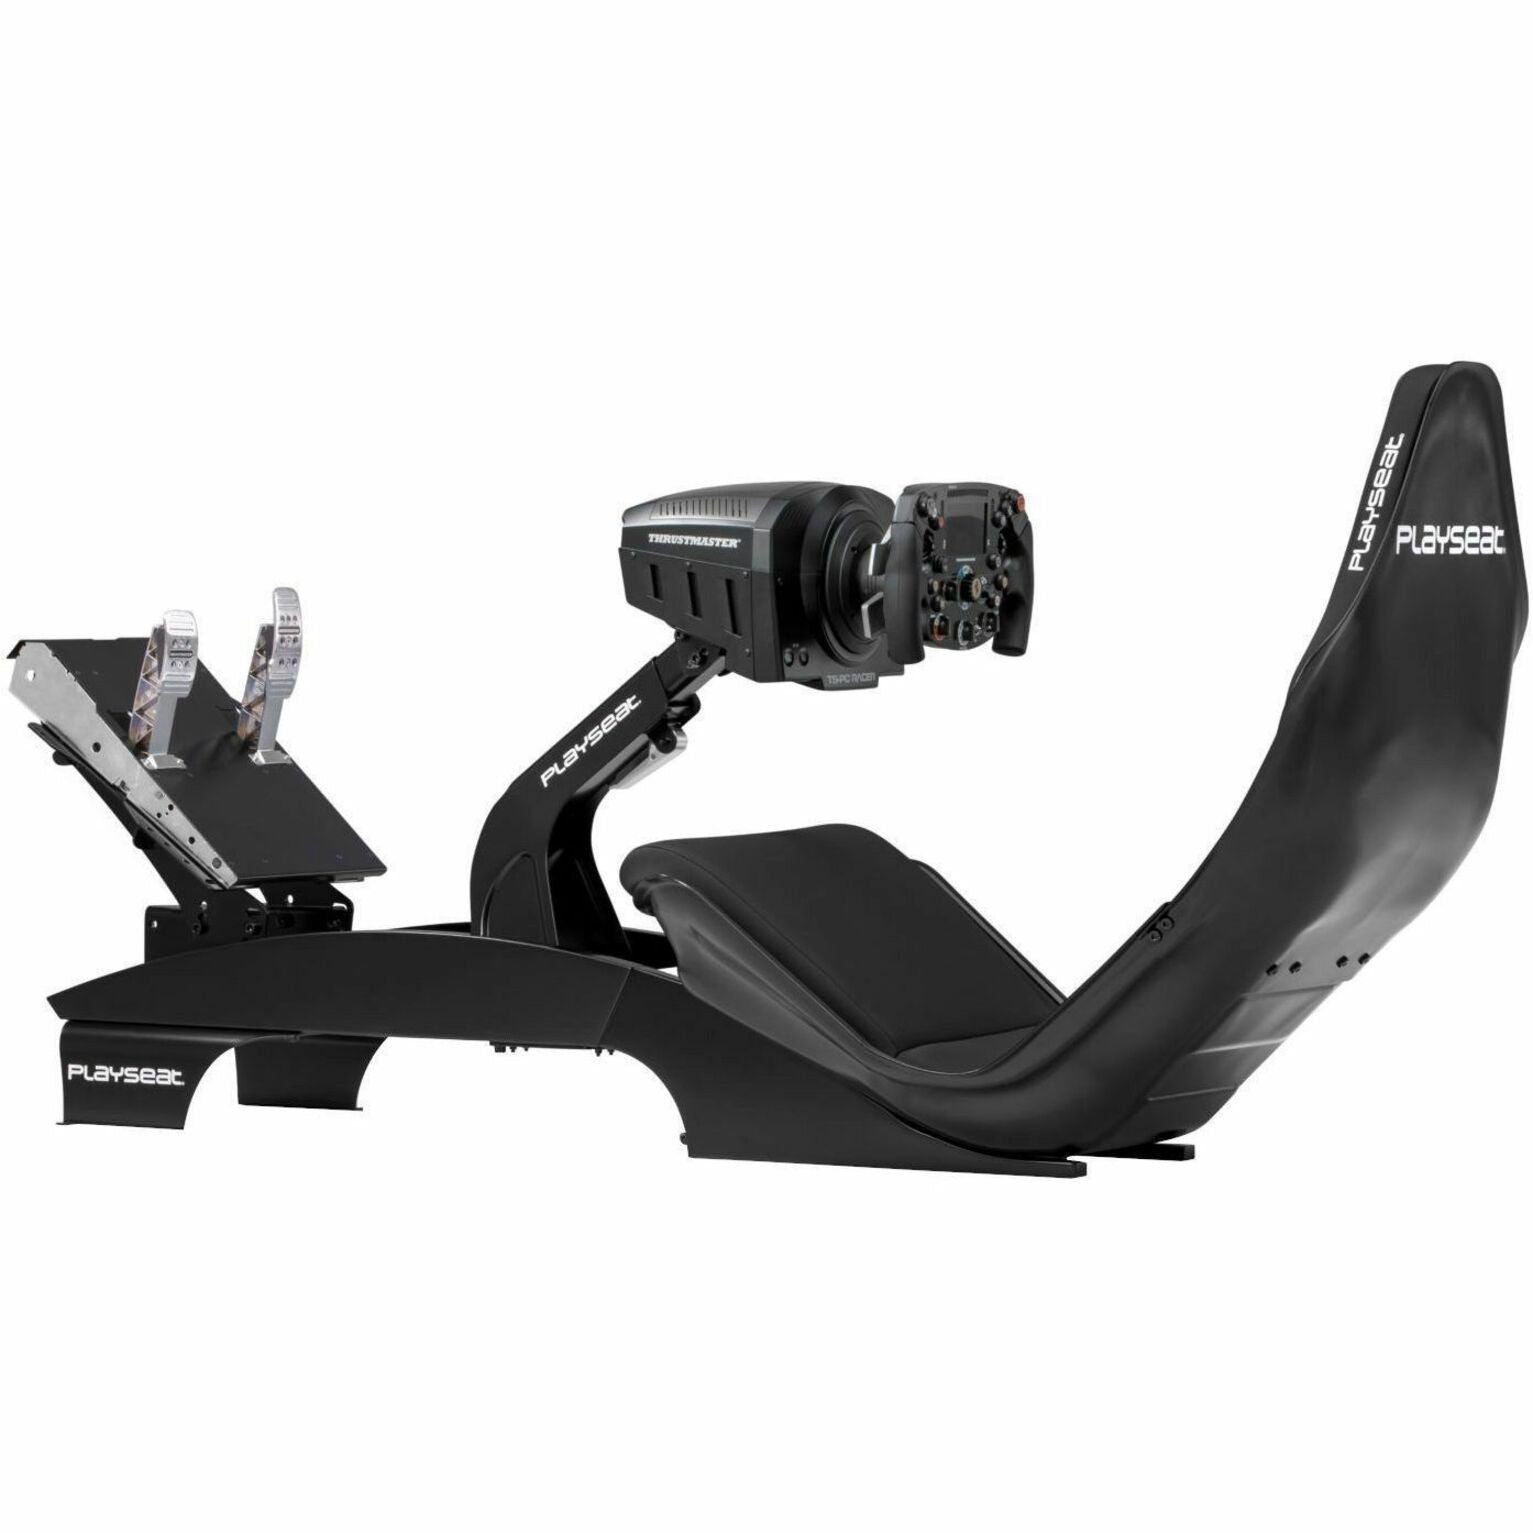 Playseats Formula Black Gaming Chair, Comfortable, Adjustable Seat Height, Tilt